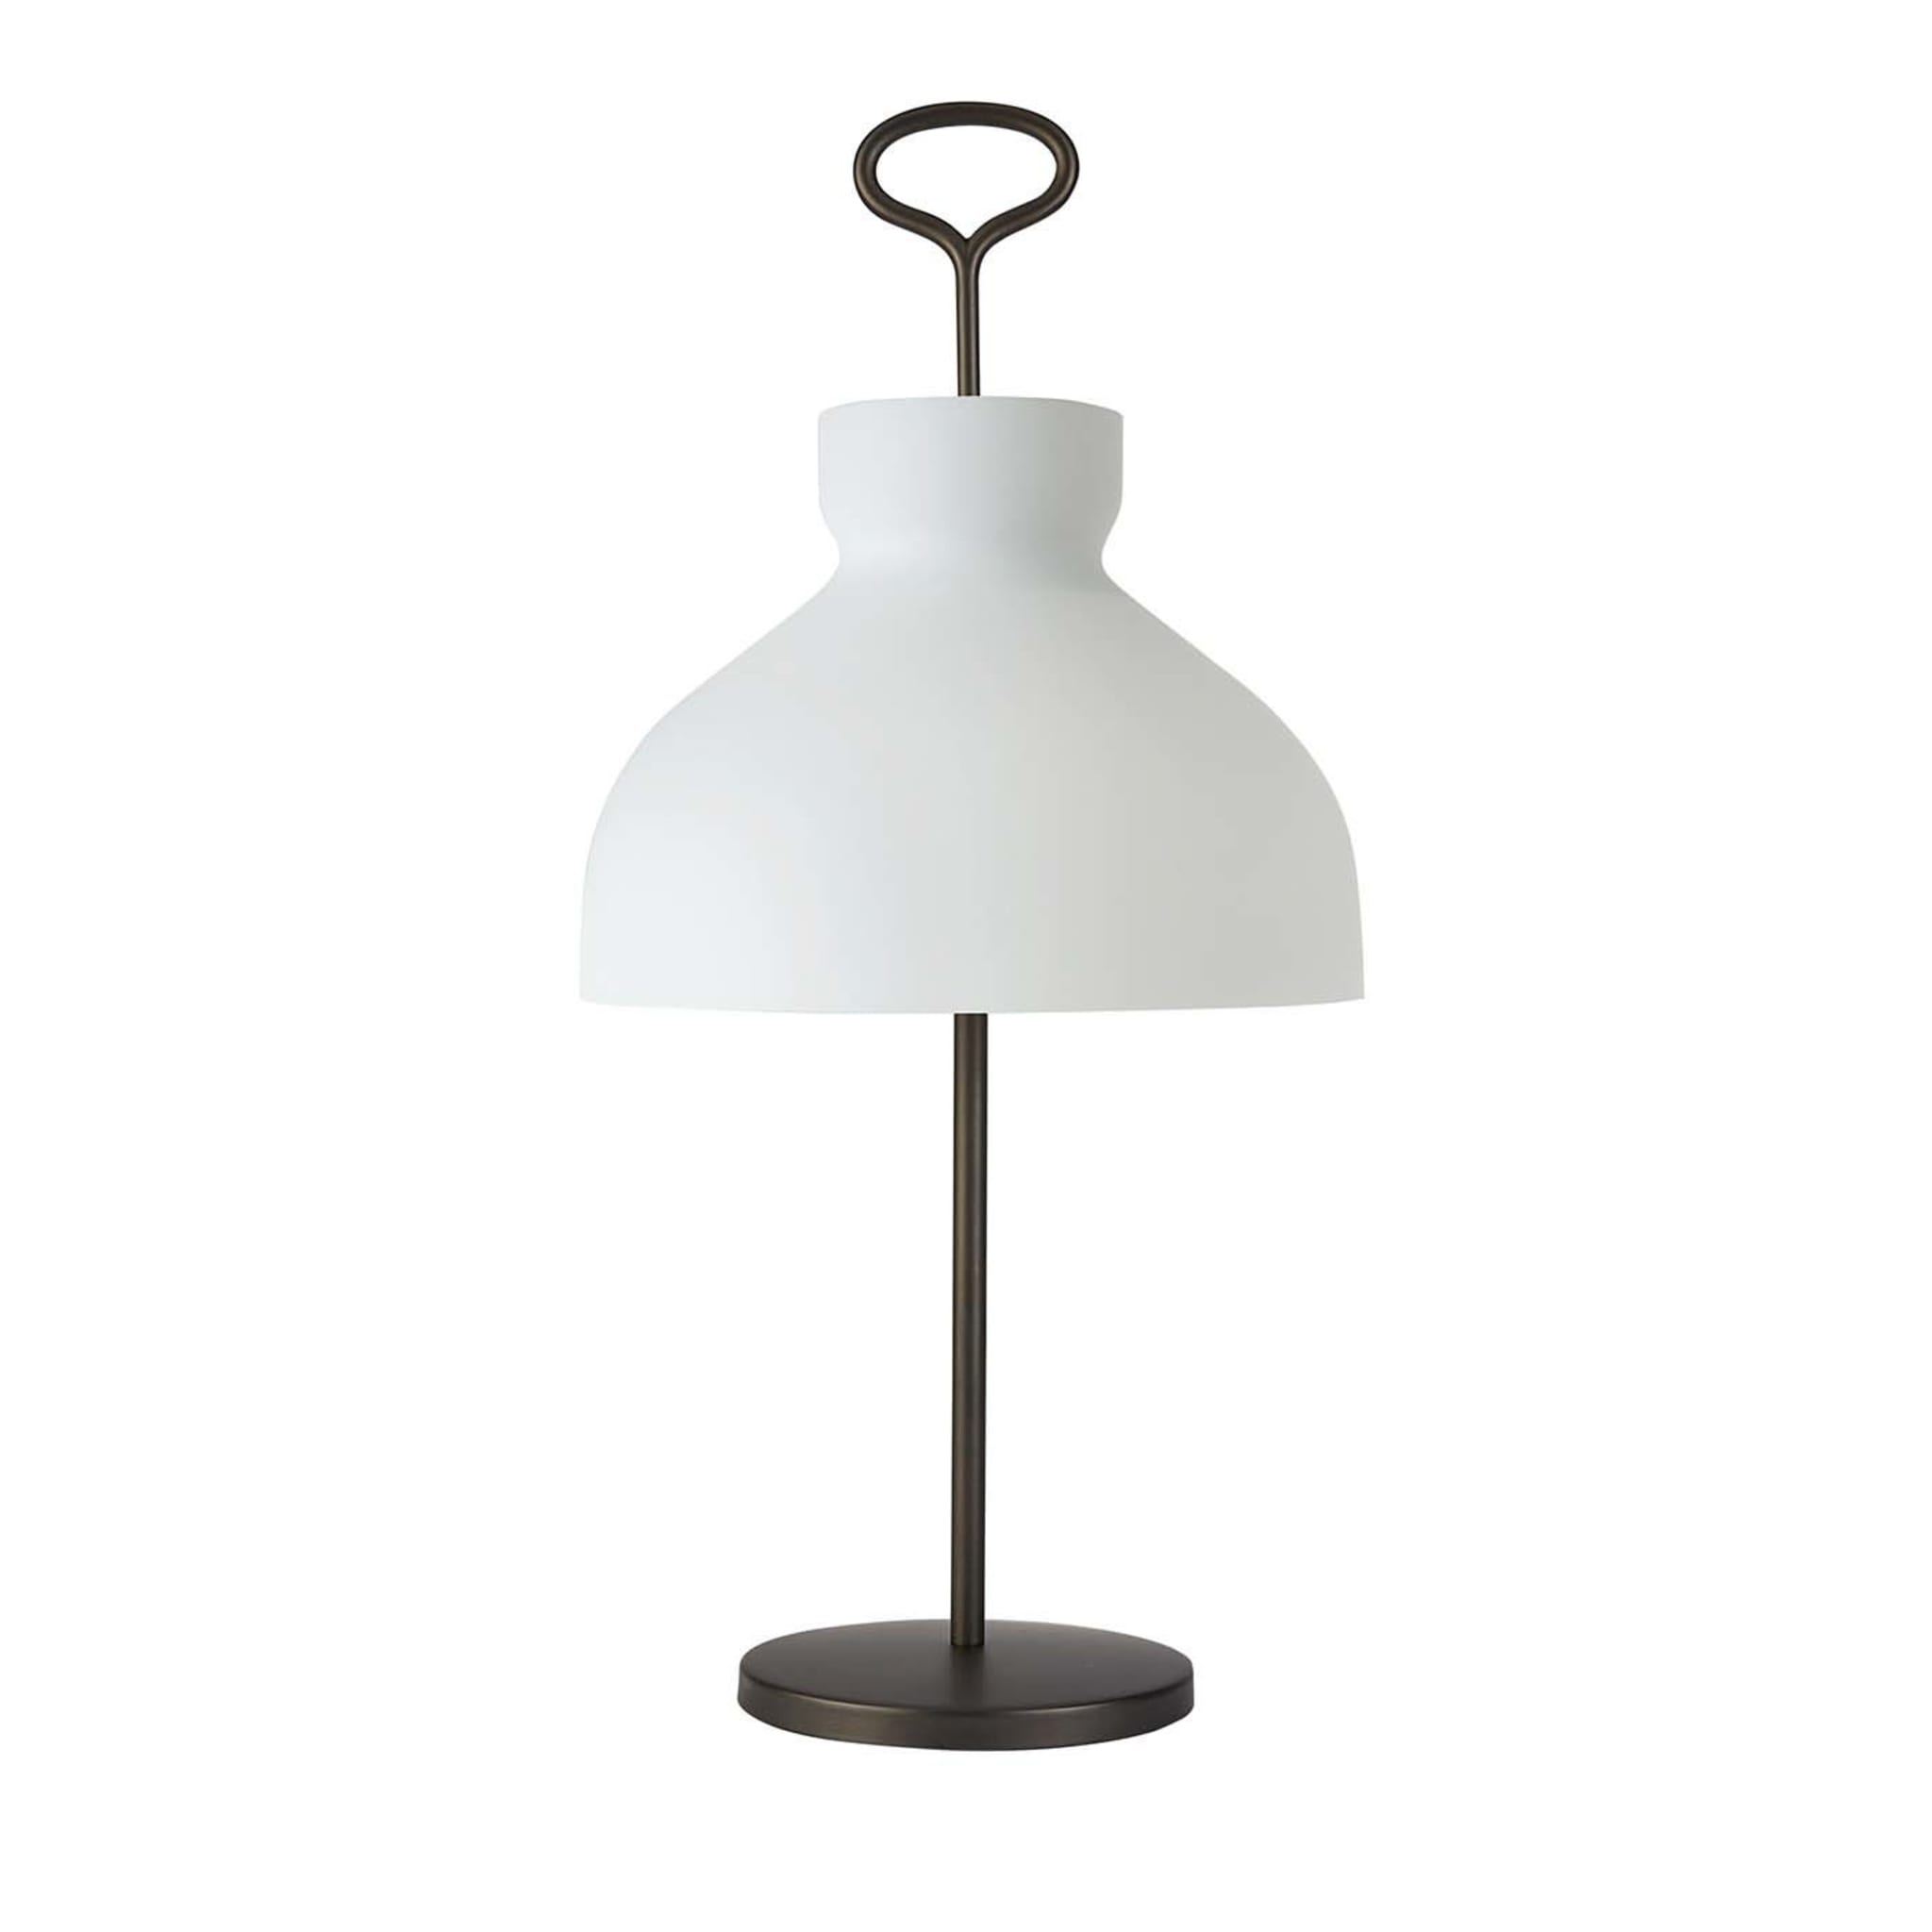 Arenzano Table Lamp by Ignazio Gardella - Main view